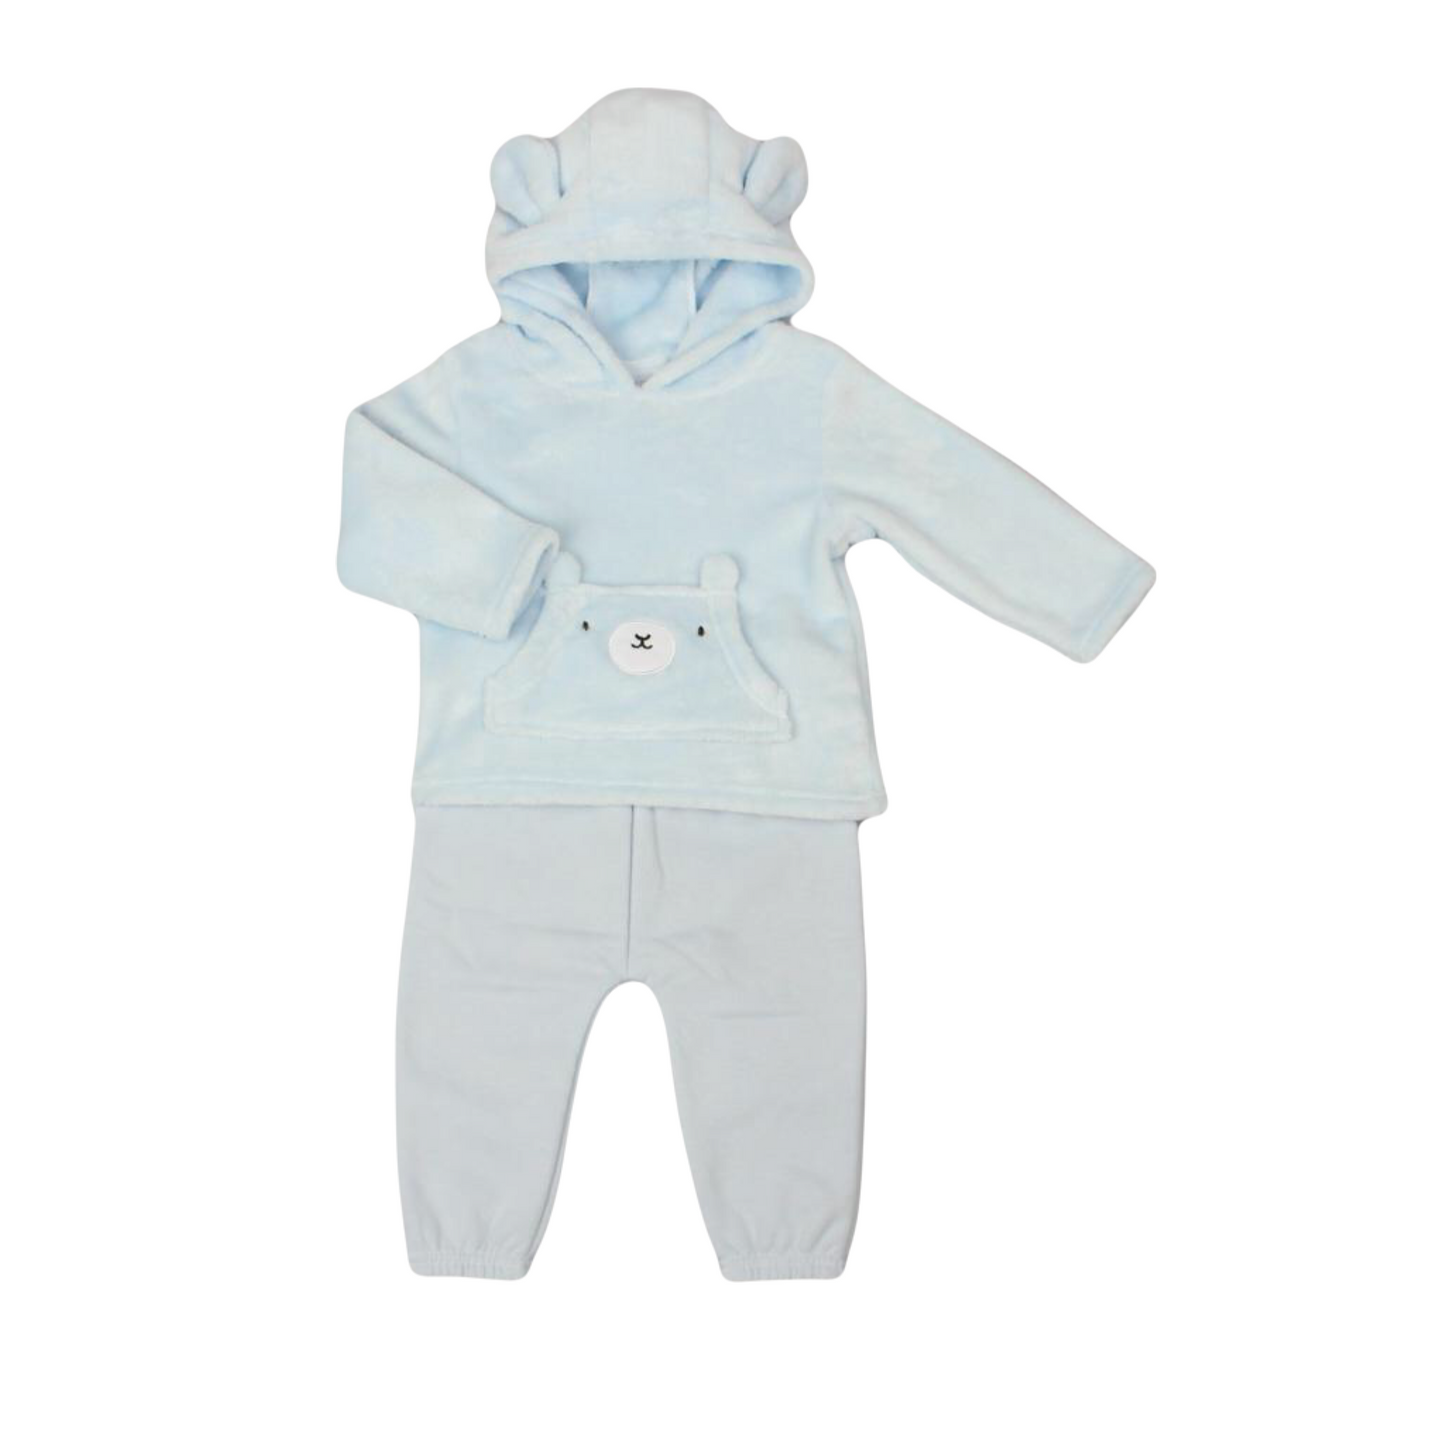 Baby Boys Plush Bear Outfit